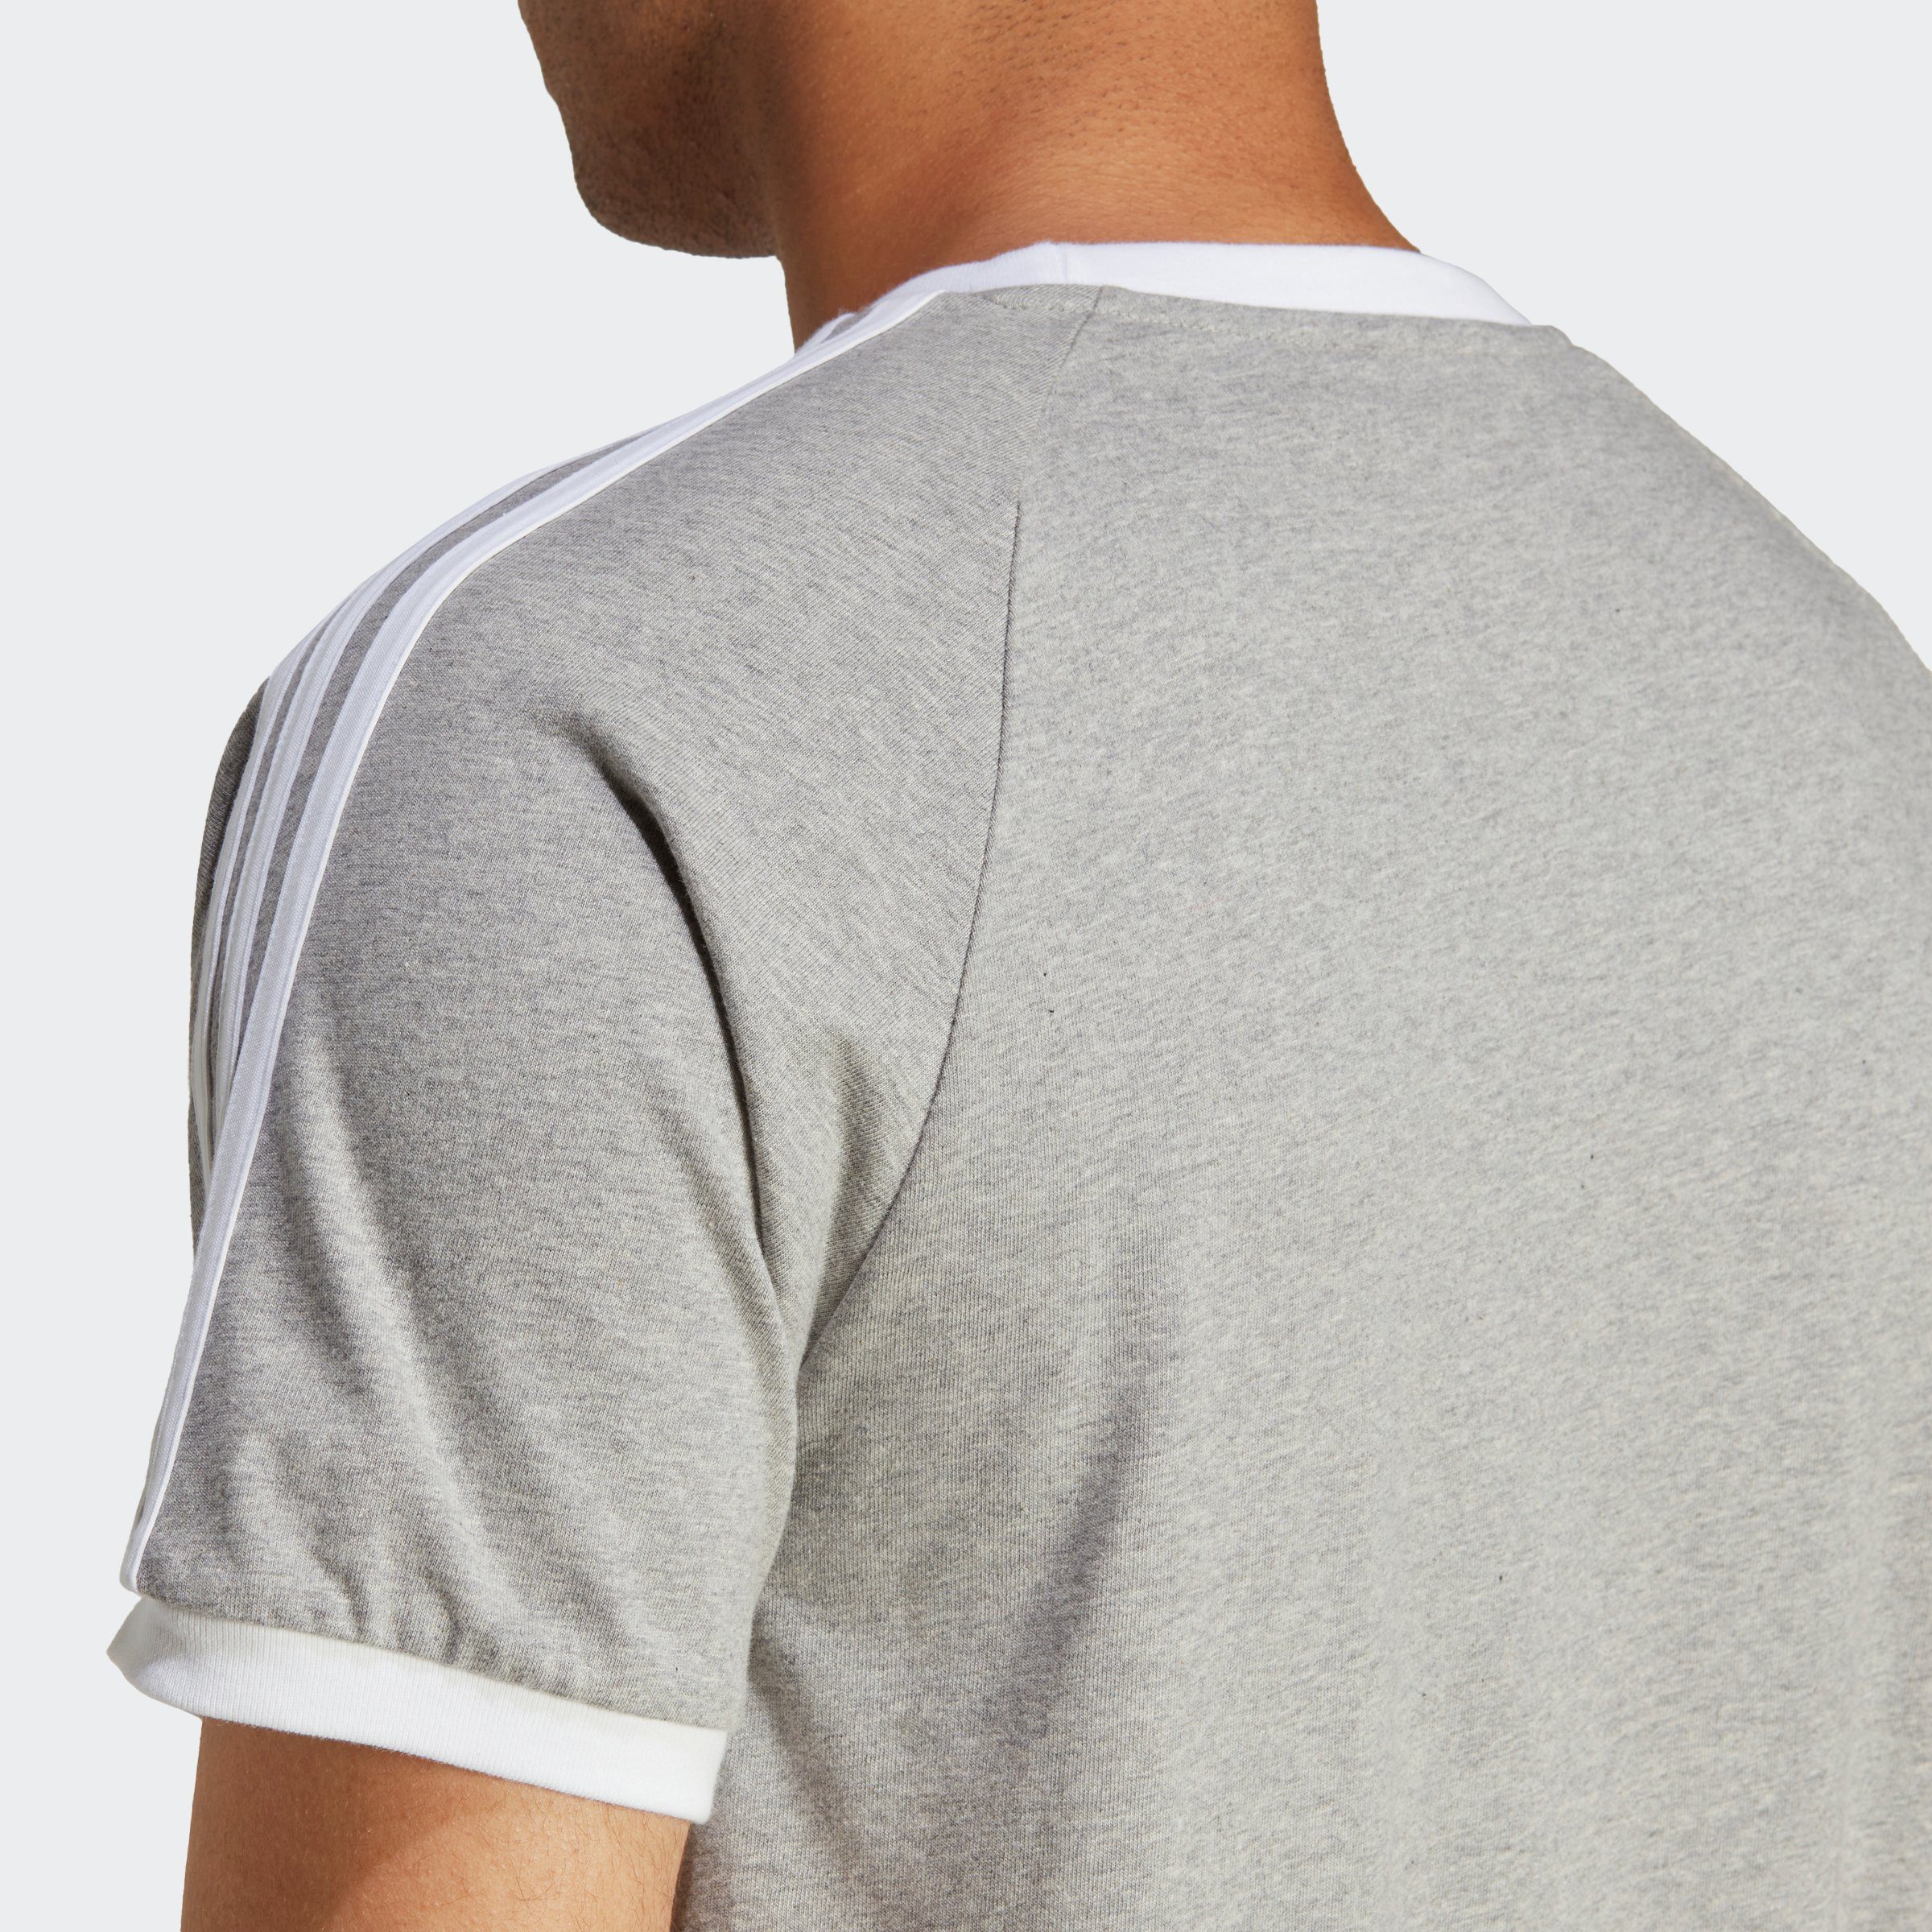 adidas Originals T-Shirt 3-STRIPES TEE Grey Heather Medium